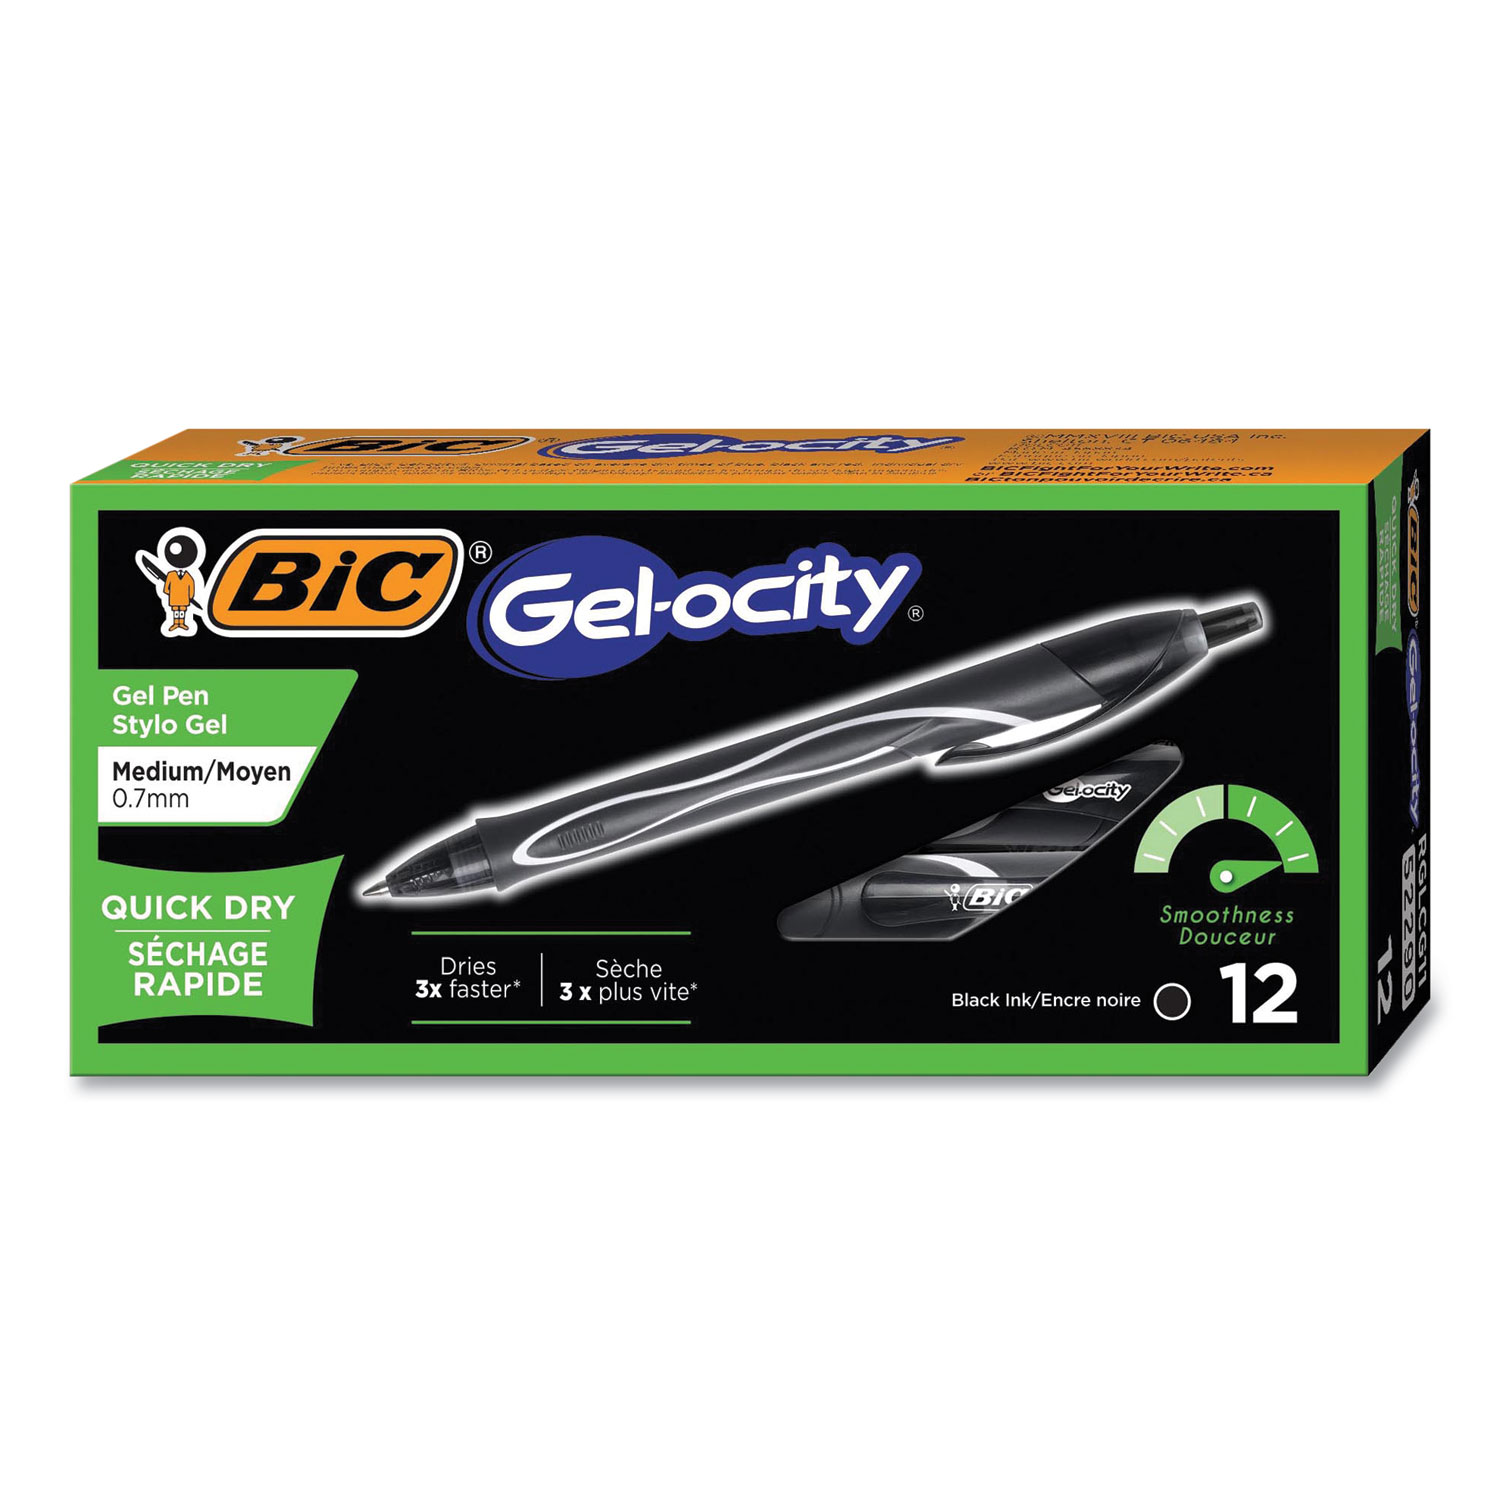  BIC RGLCG11-BK Gel-ocity Quick Dry Retractable Gel Pen, Medium 0.7mm, Black Ink/Barrel, Dozen (BICRGLCG11BK) 